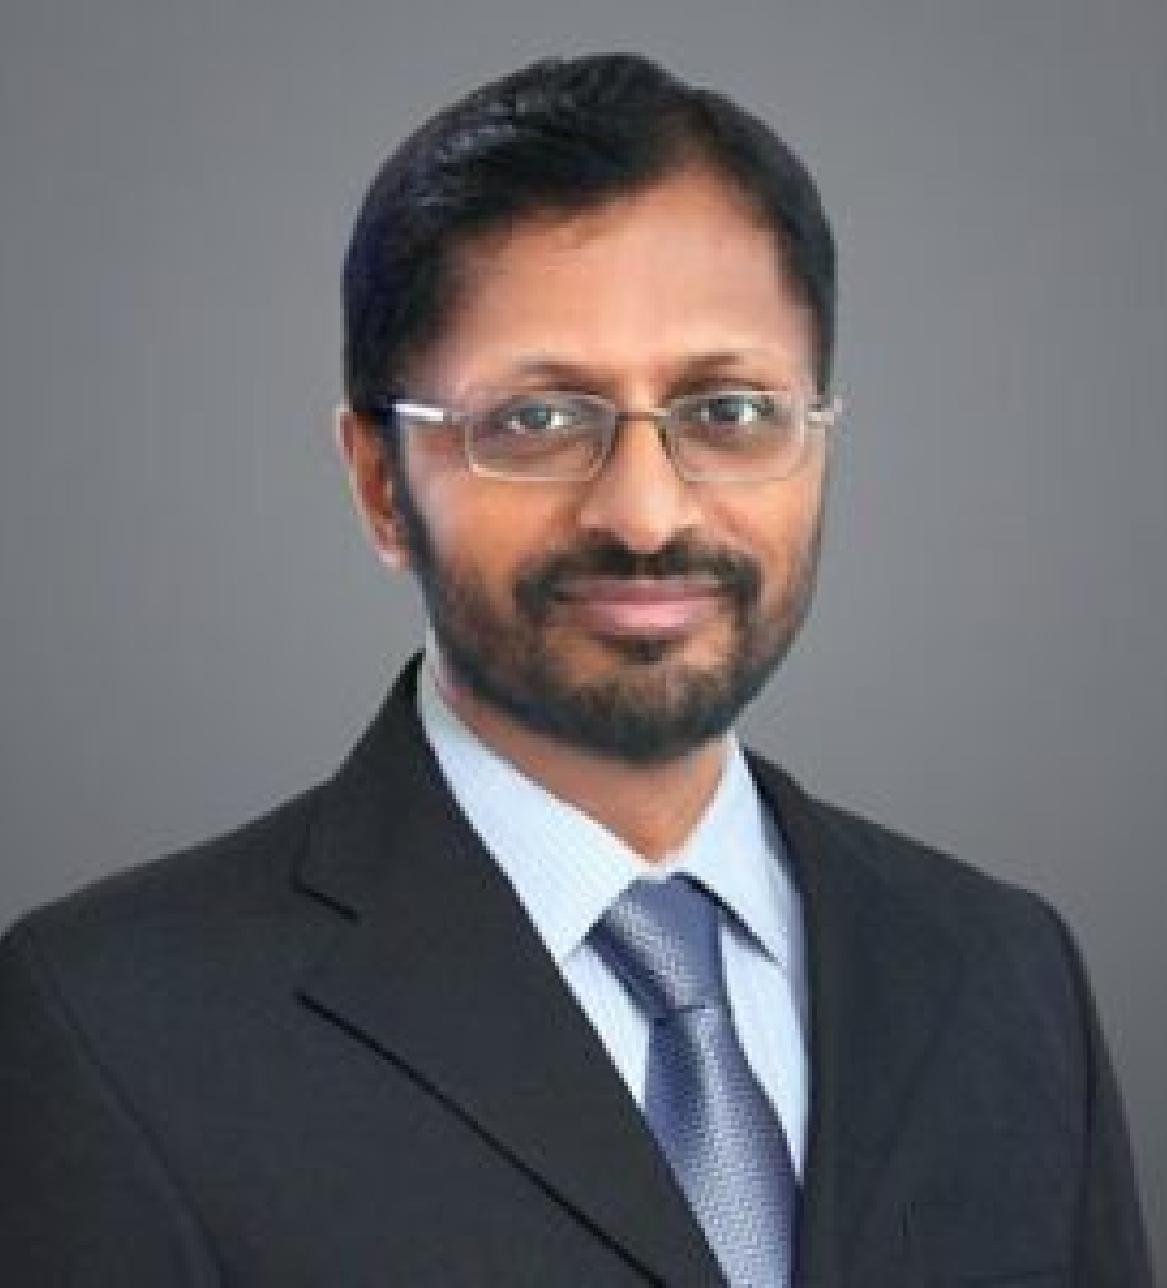 Dr. Ashok Pillai